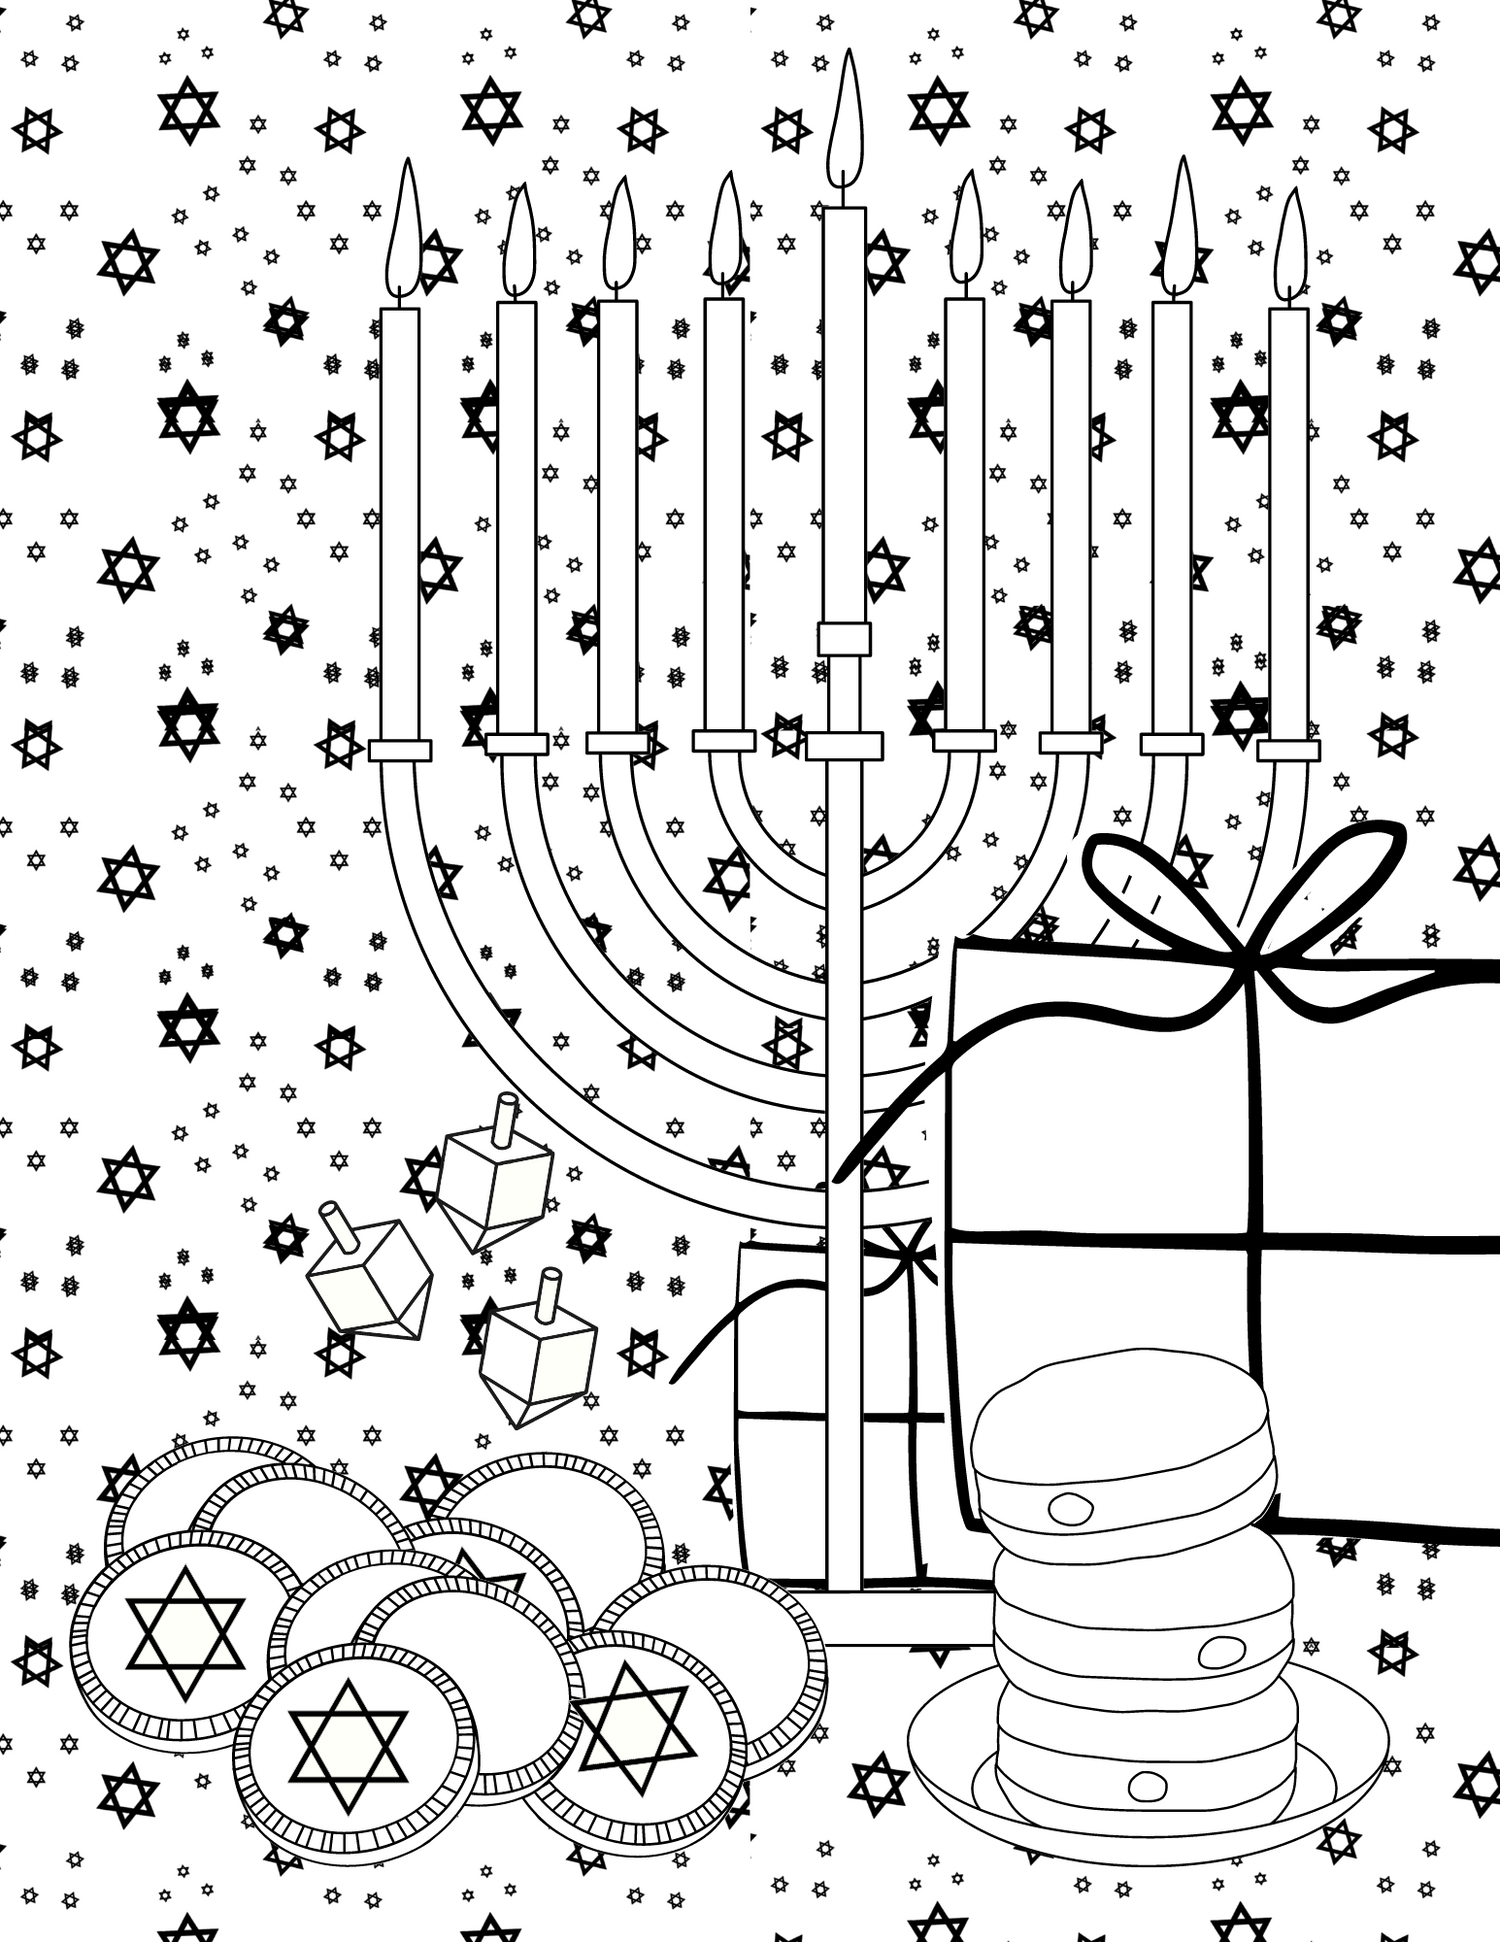 menorah, hanukkah gelt, soufganiyot, gifts, free coloring pages from Hanukkah Kits 